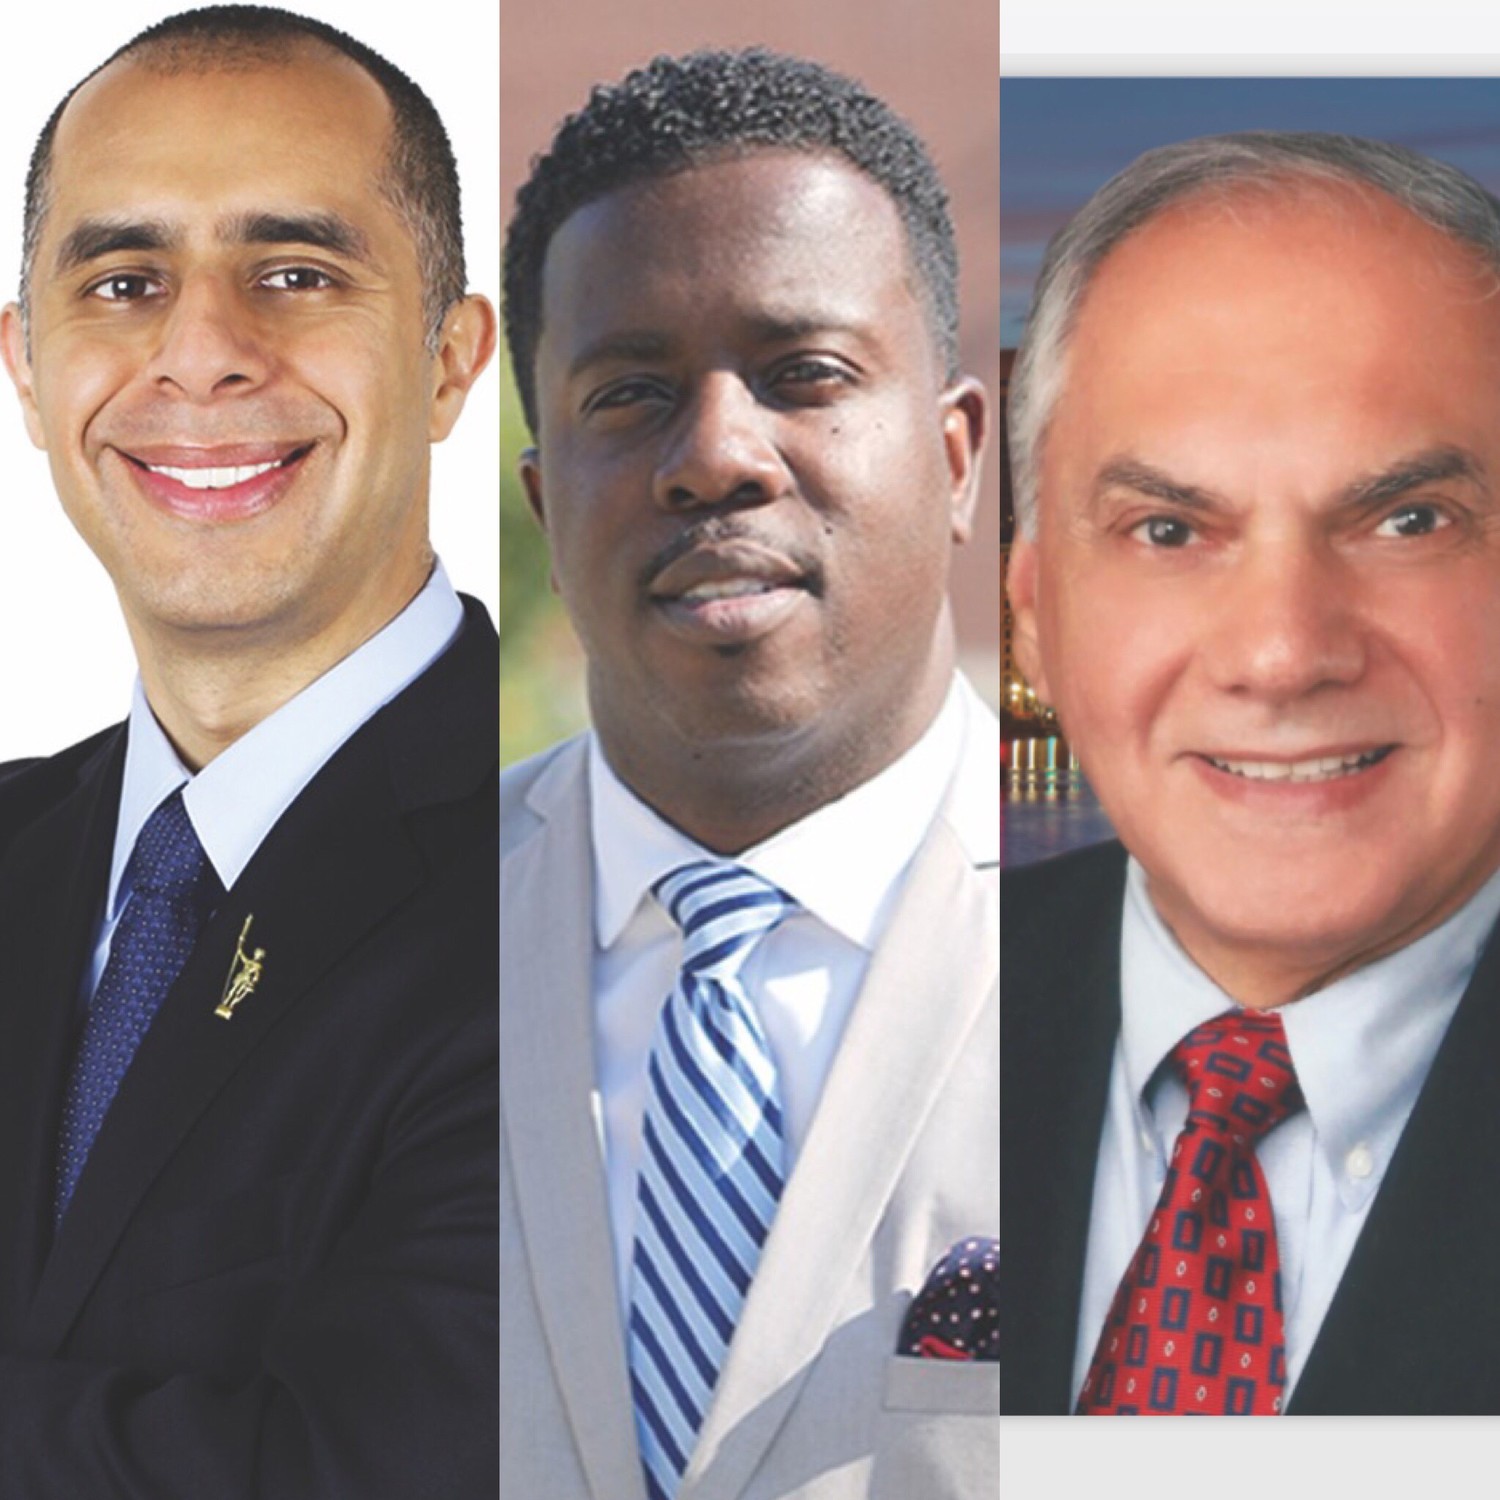 Meet the candidates in the Democratic Mayoral Primary: Jorge Elorza, Kobi Dennis, Robert Derobbio